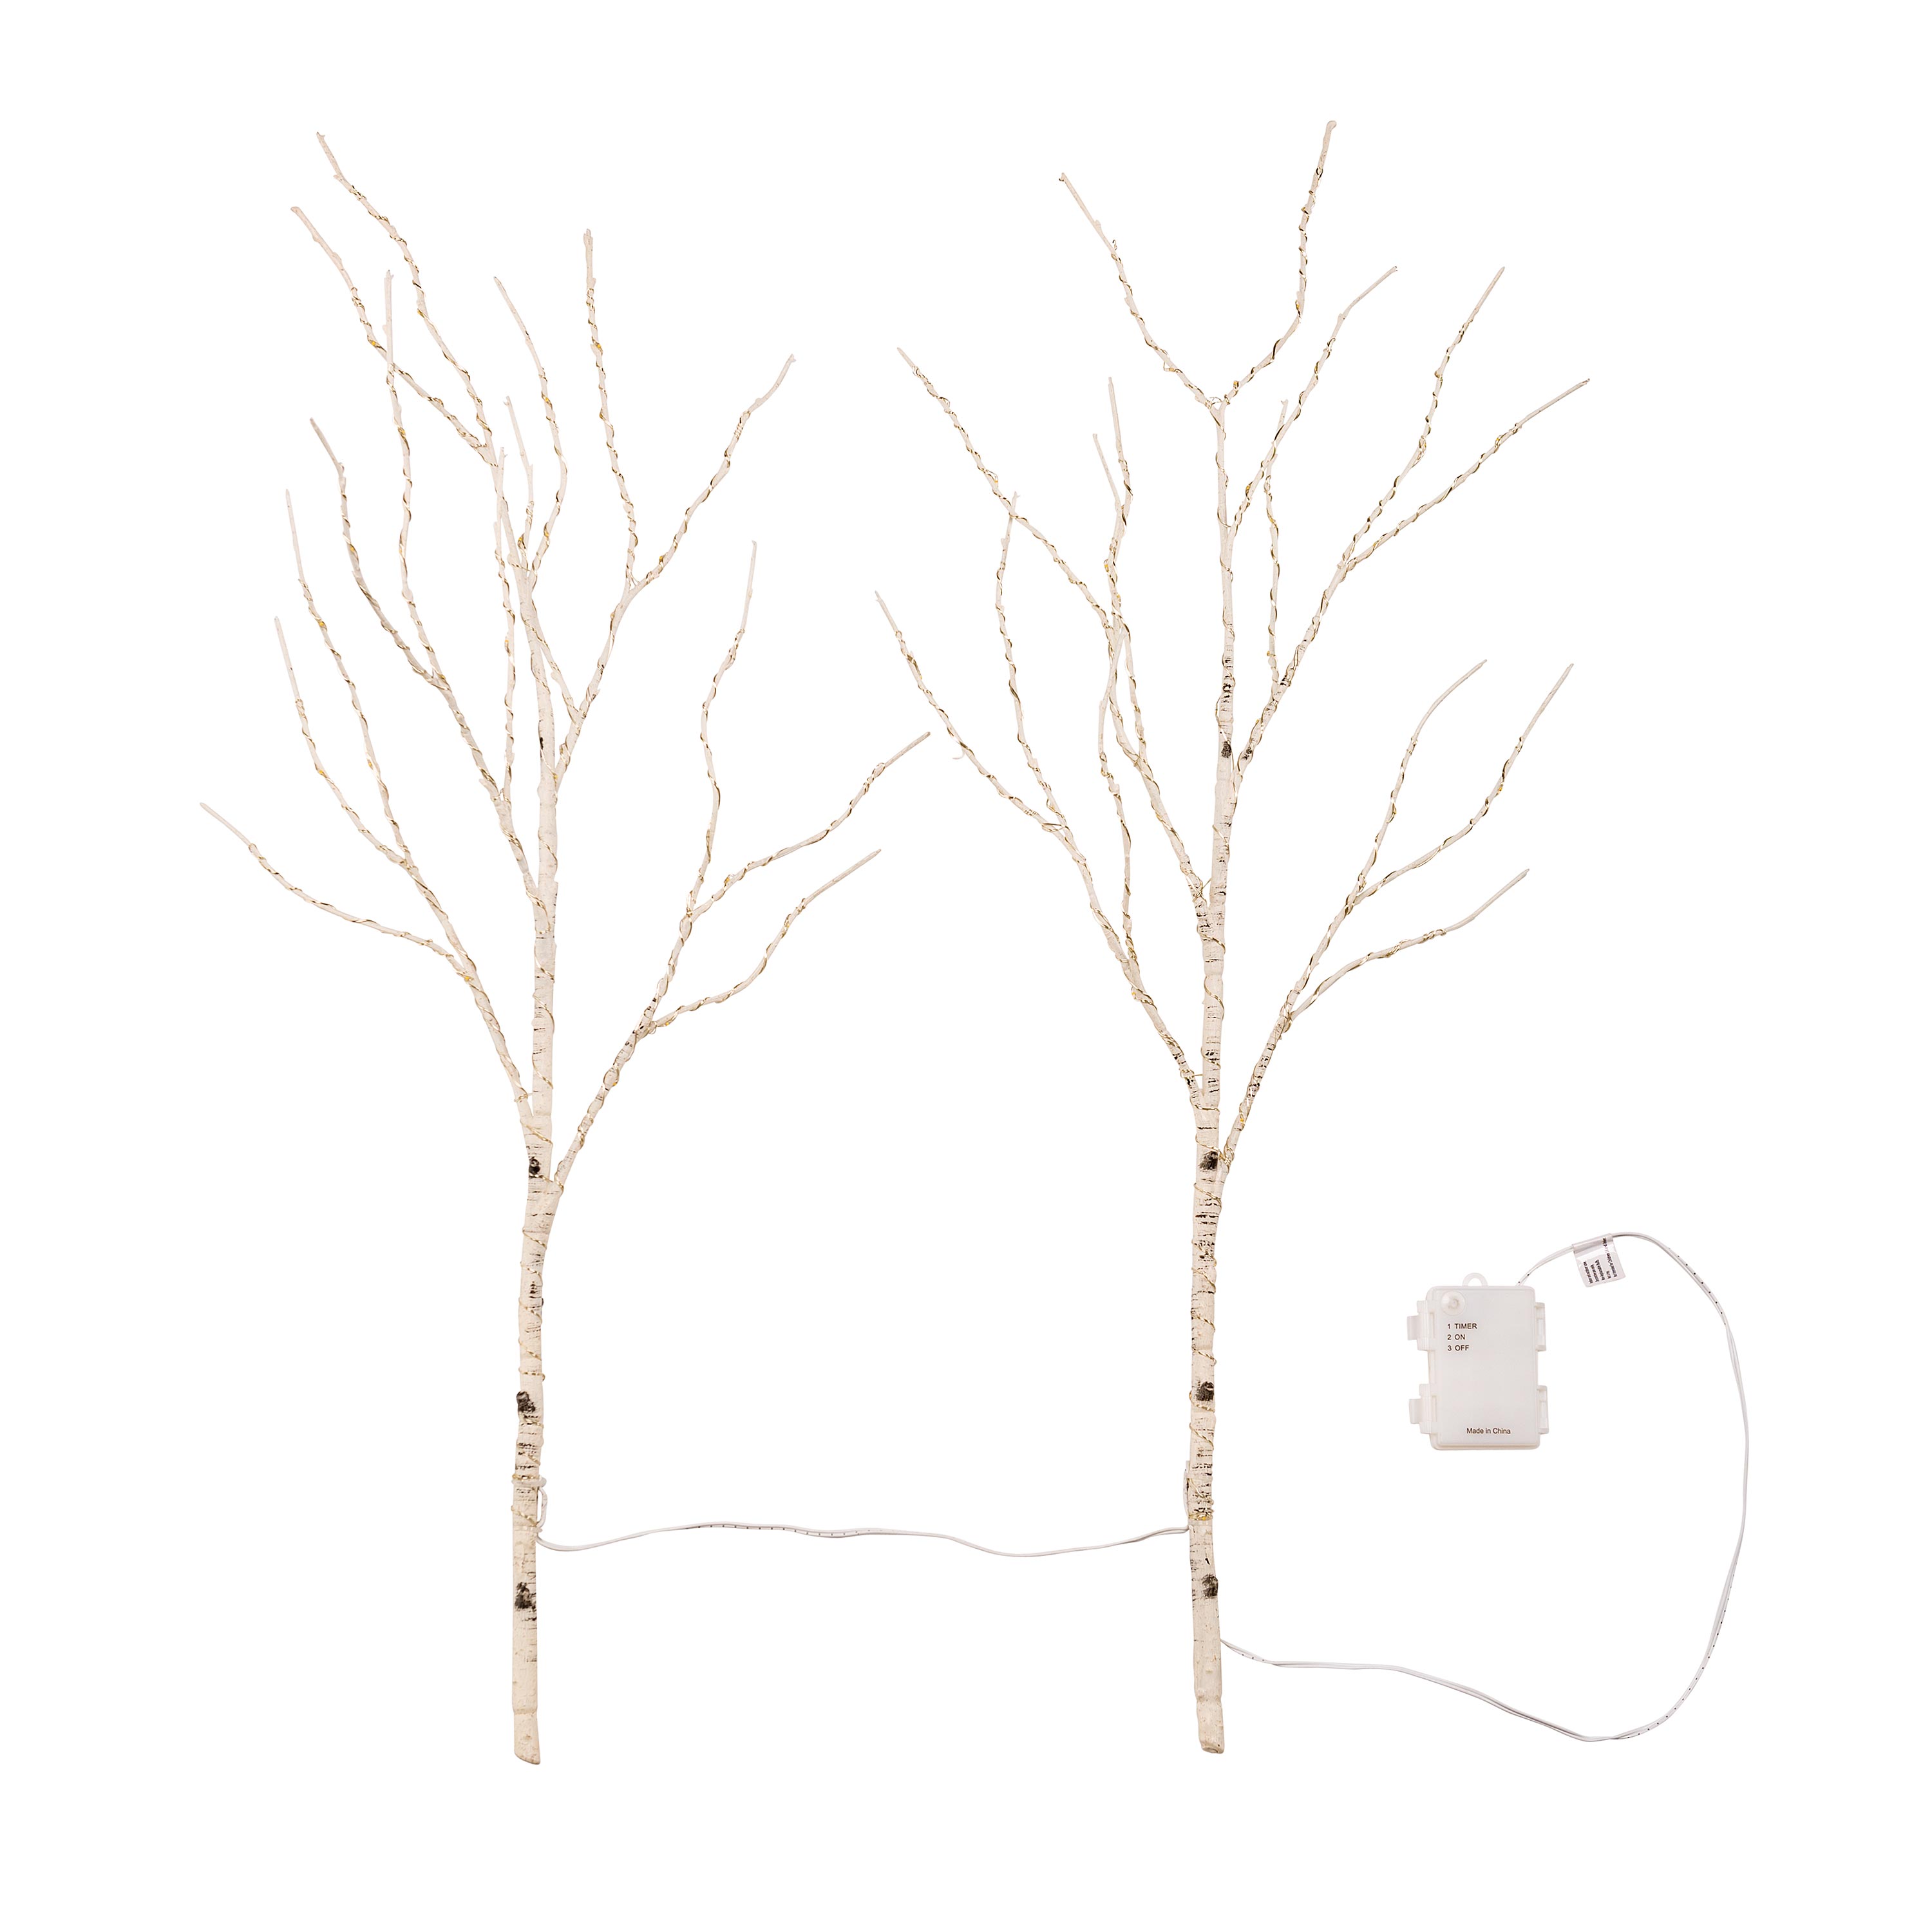 White Birch Twigs/set of 10 Hand Painted Birch Branches/vase